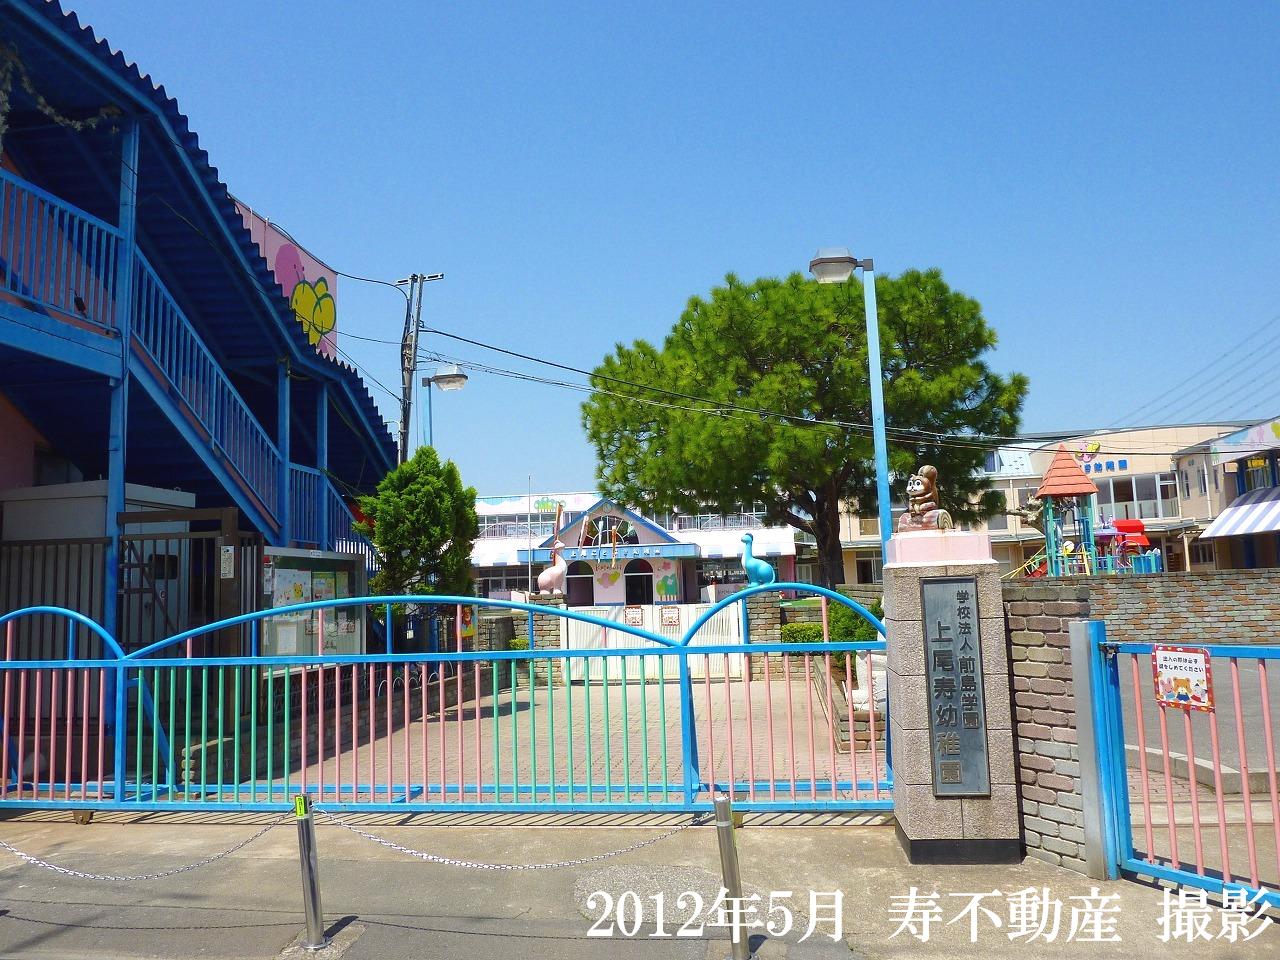 kindergarten ・ Nursery. Ageo Kotobuki kindergarten (kindergarten ・ 936m to the nursery)